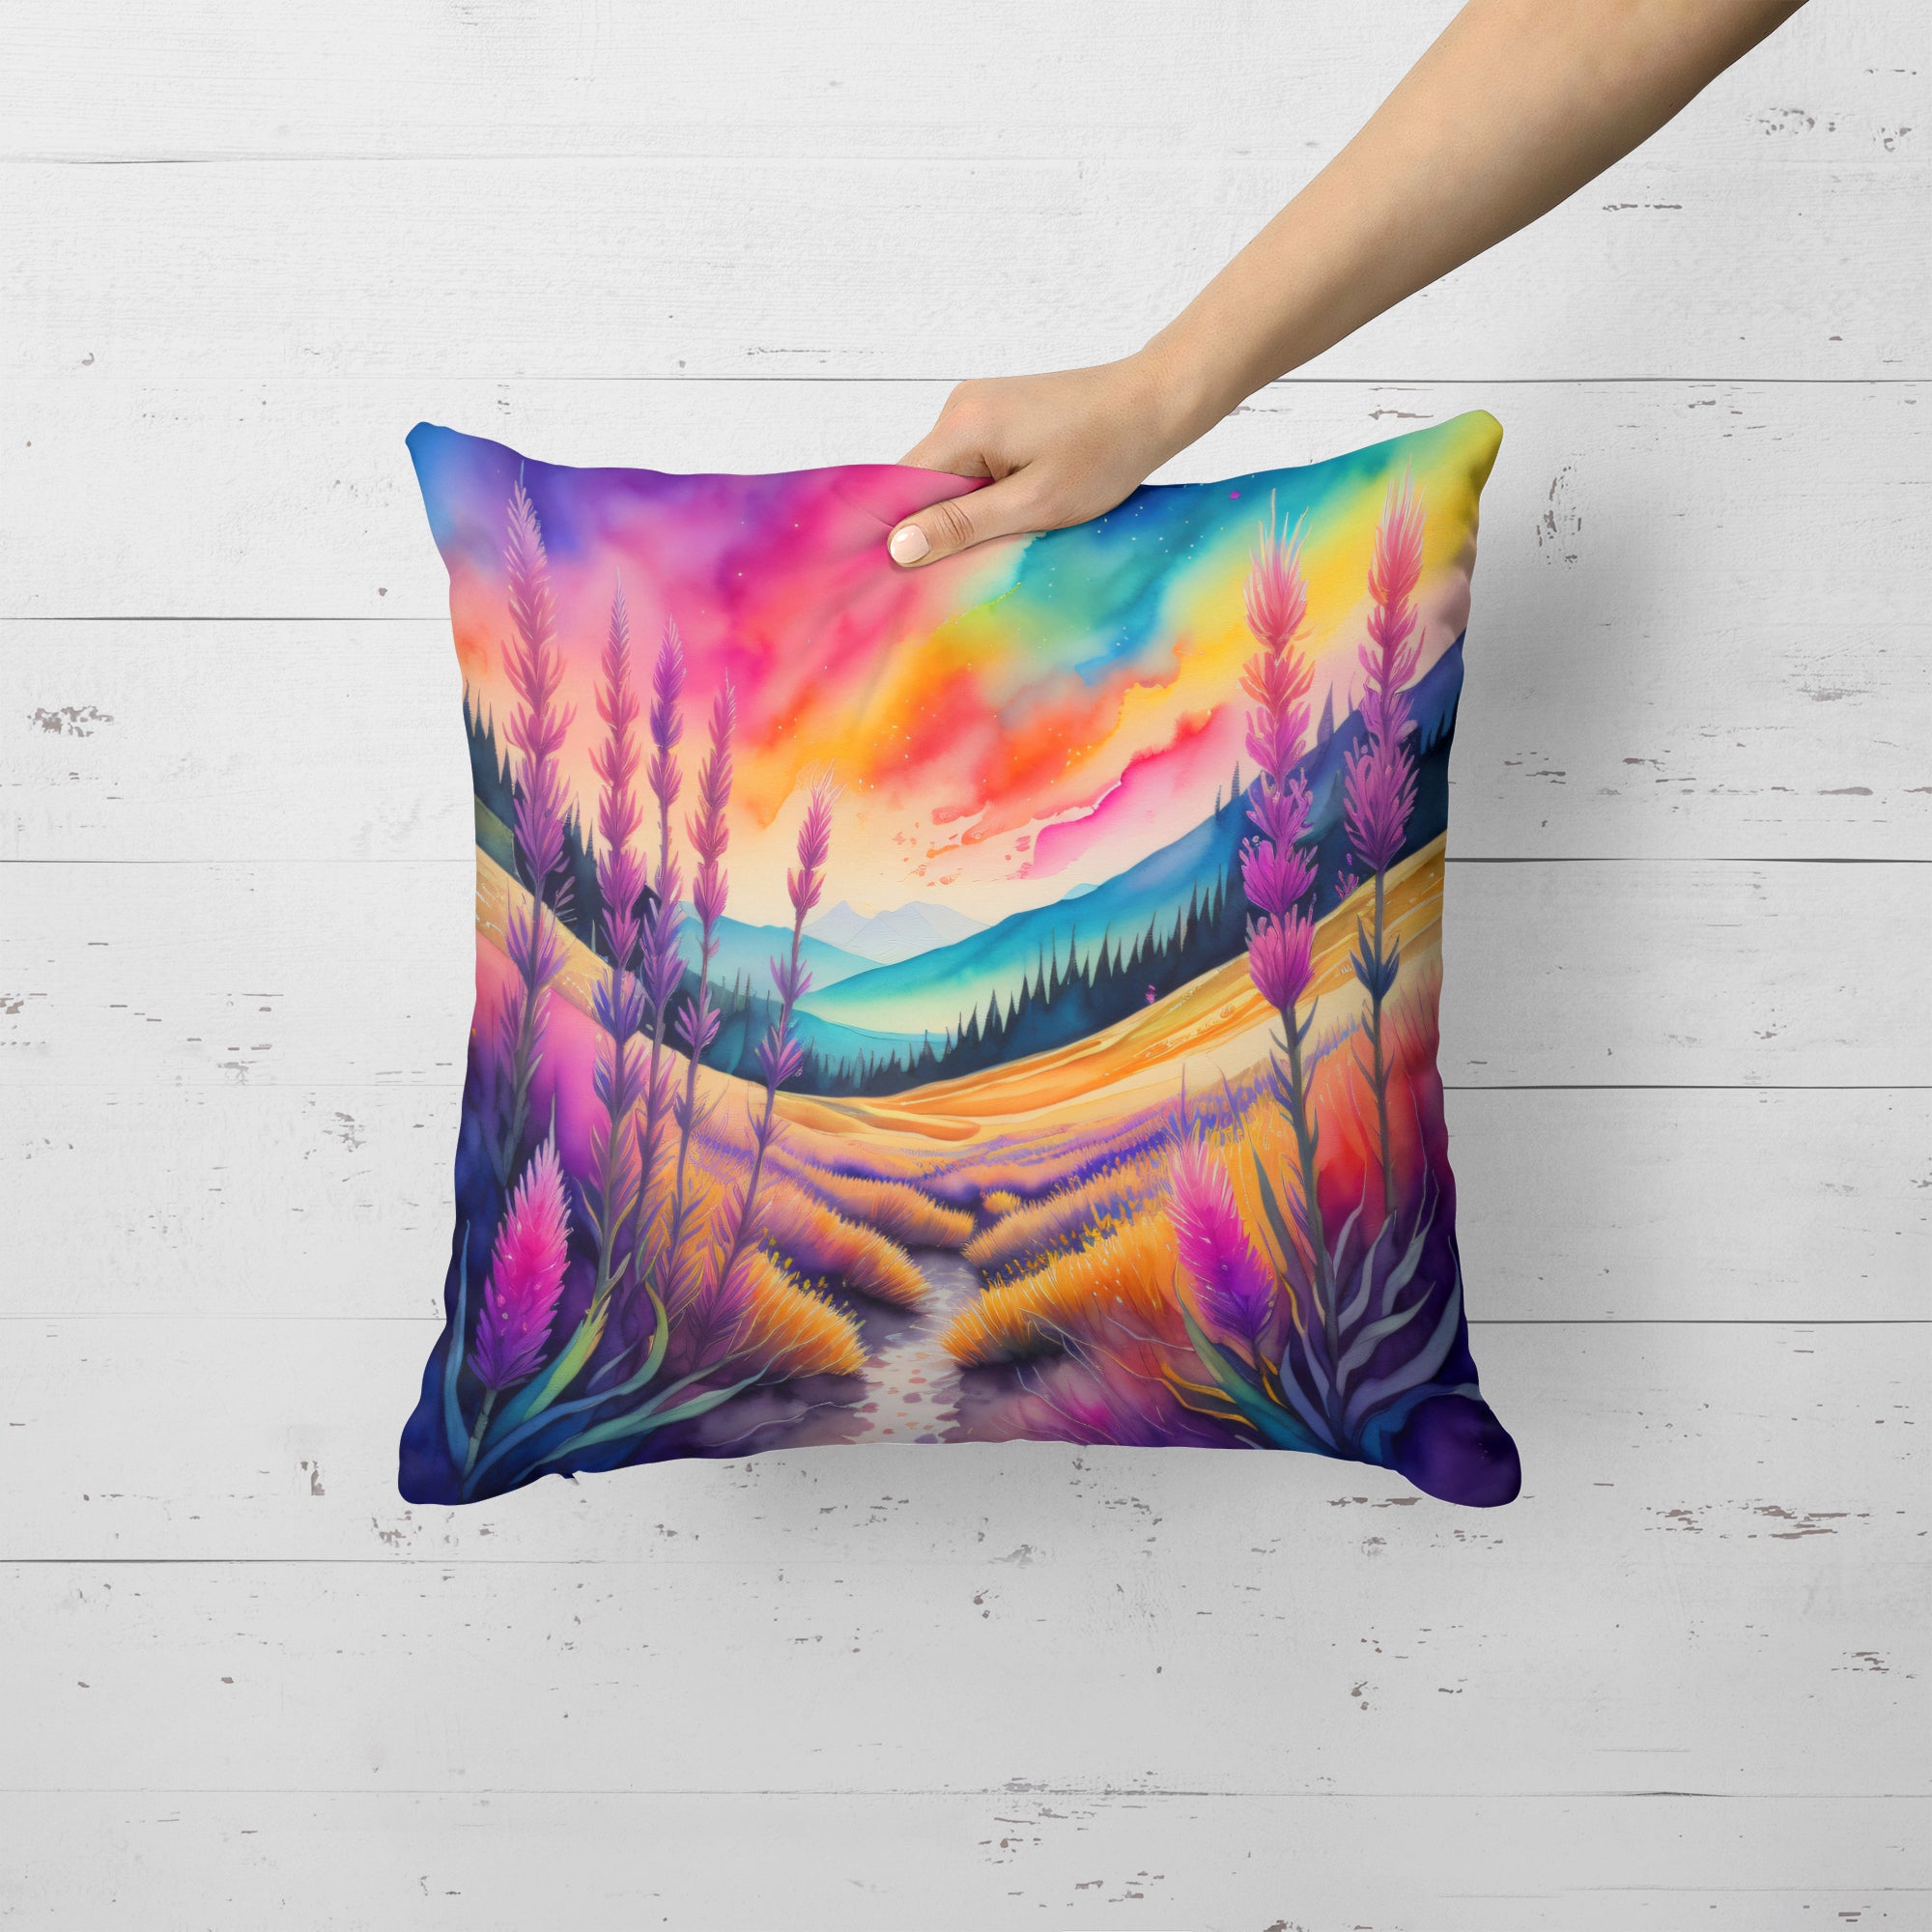 Buy this Colorful Liatris Fabric Decorative Pillow